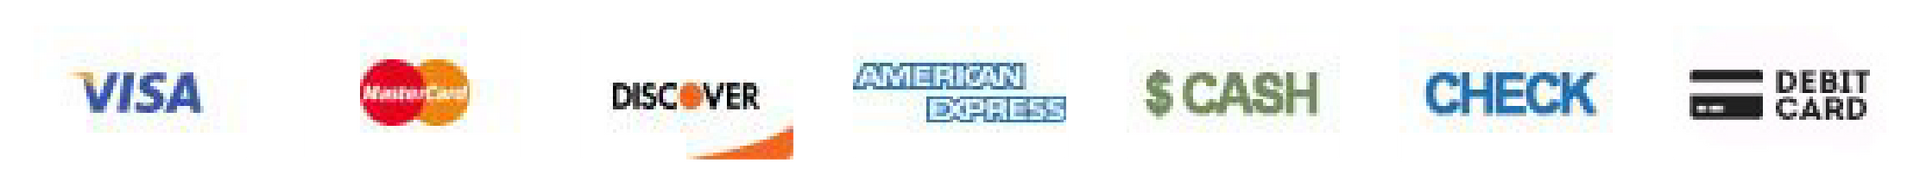 a row of credit card logos including visa mastercard and american express